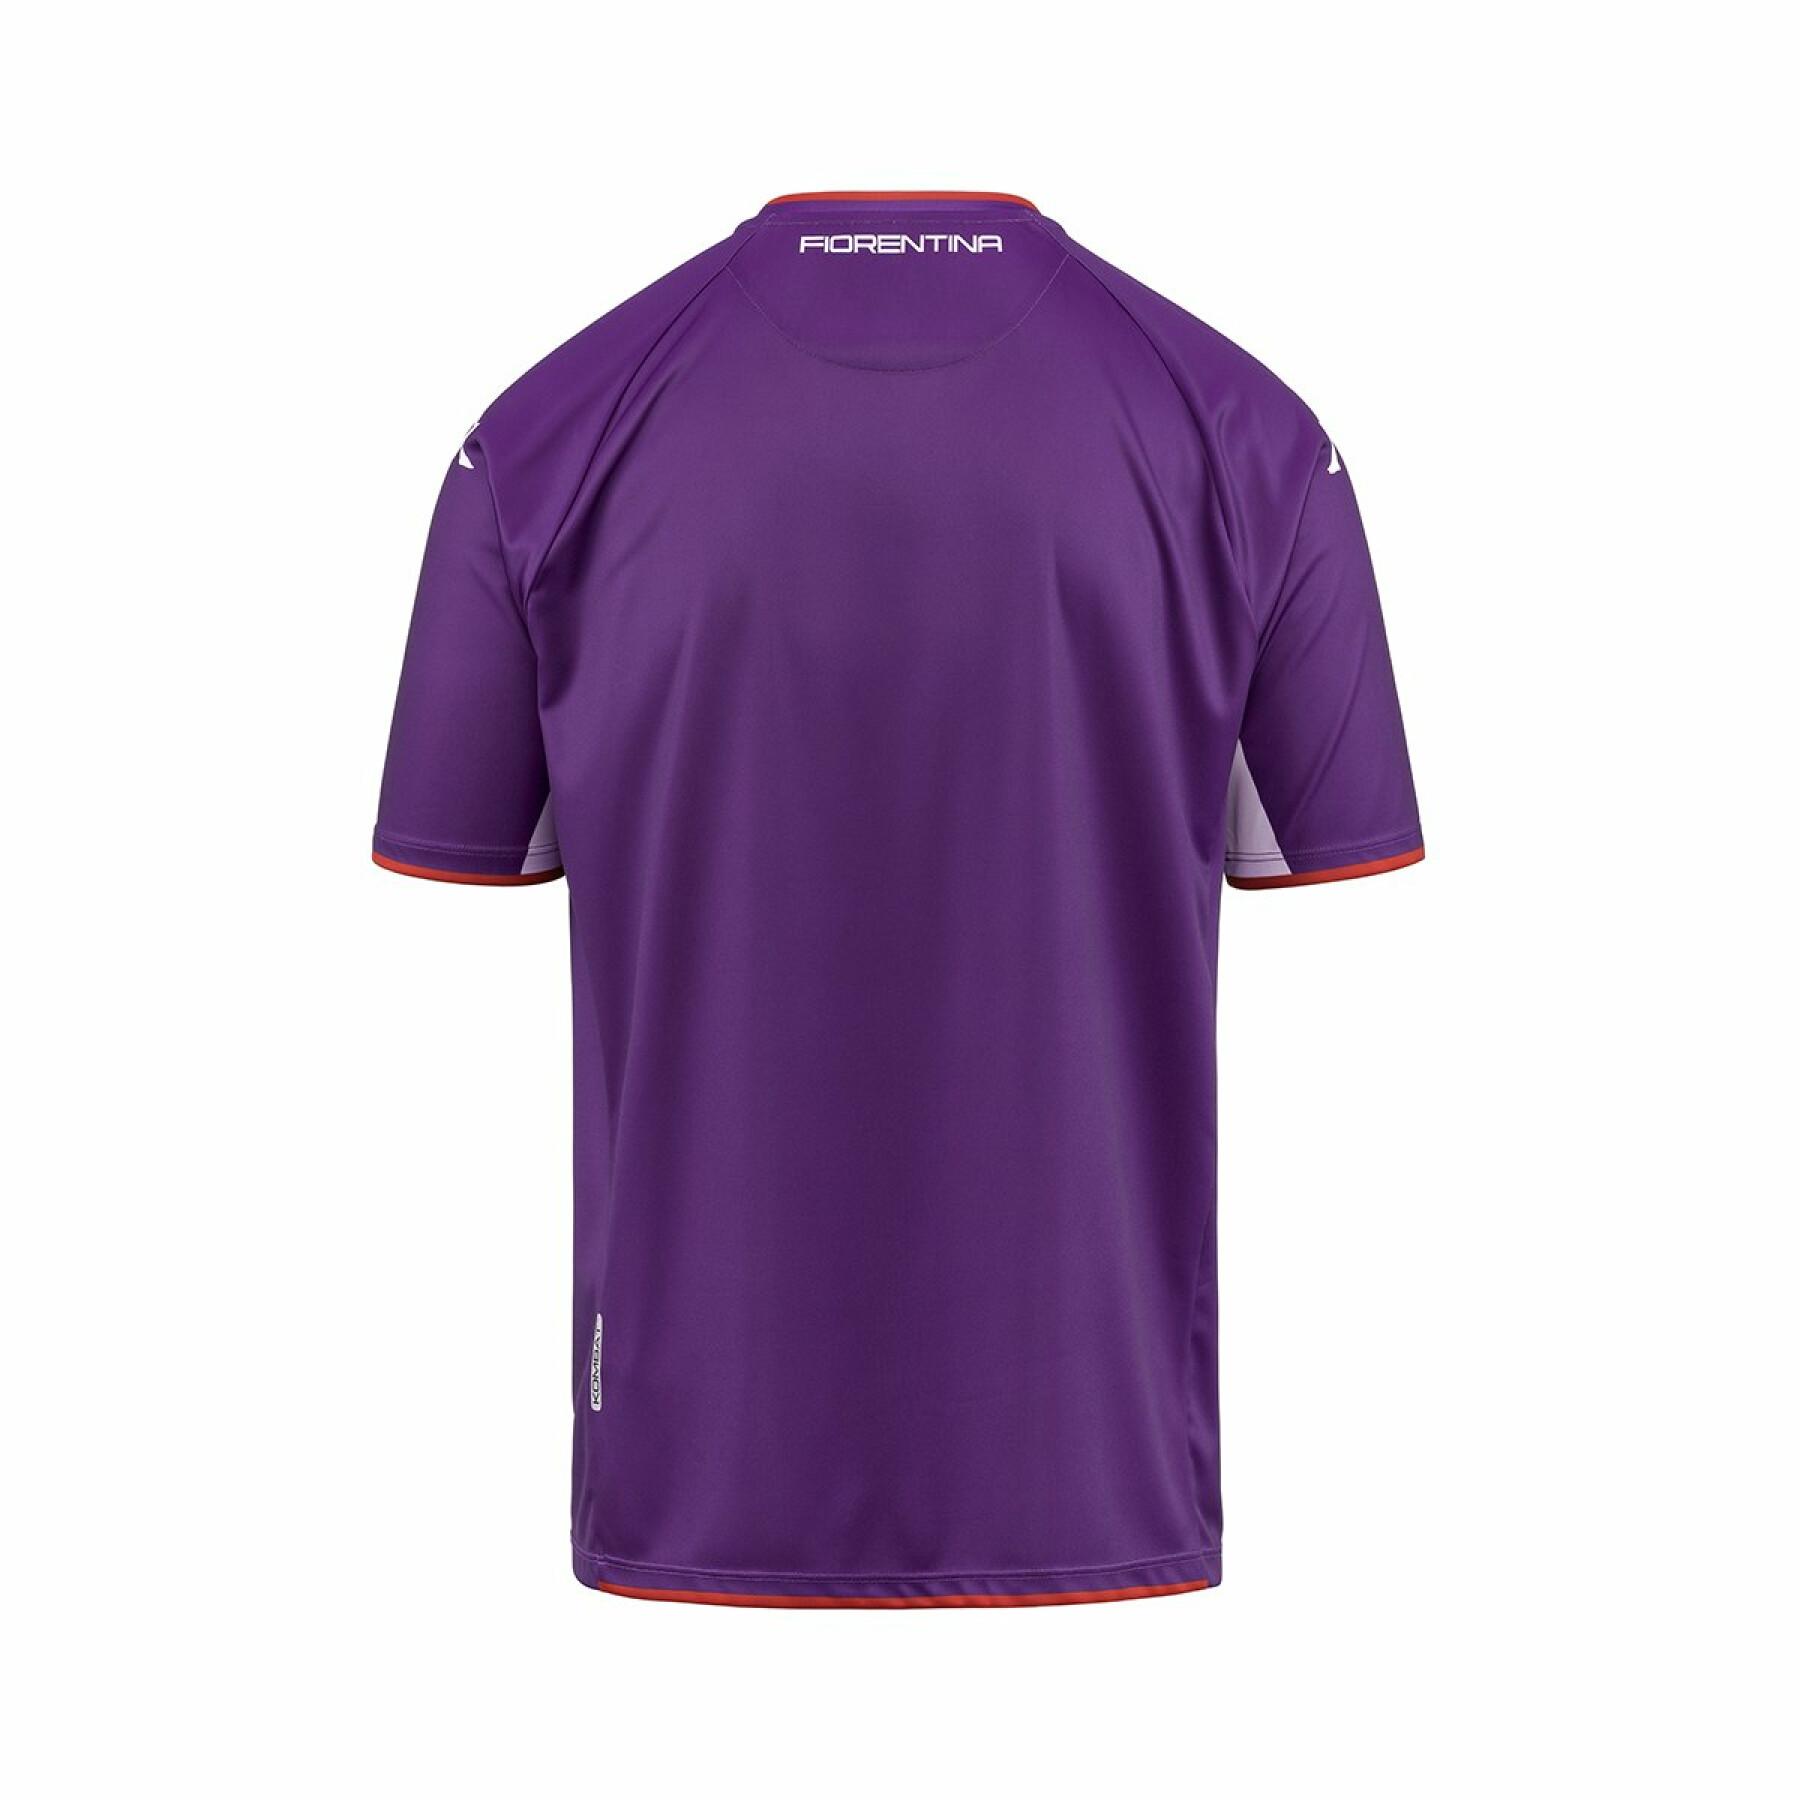 Home jersey Fiorentina AC 2021/22